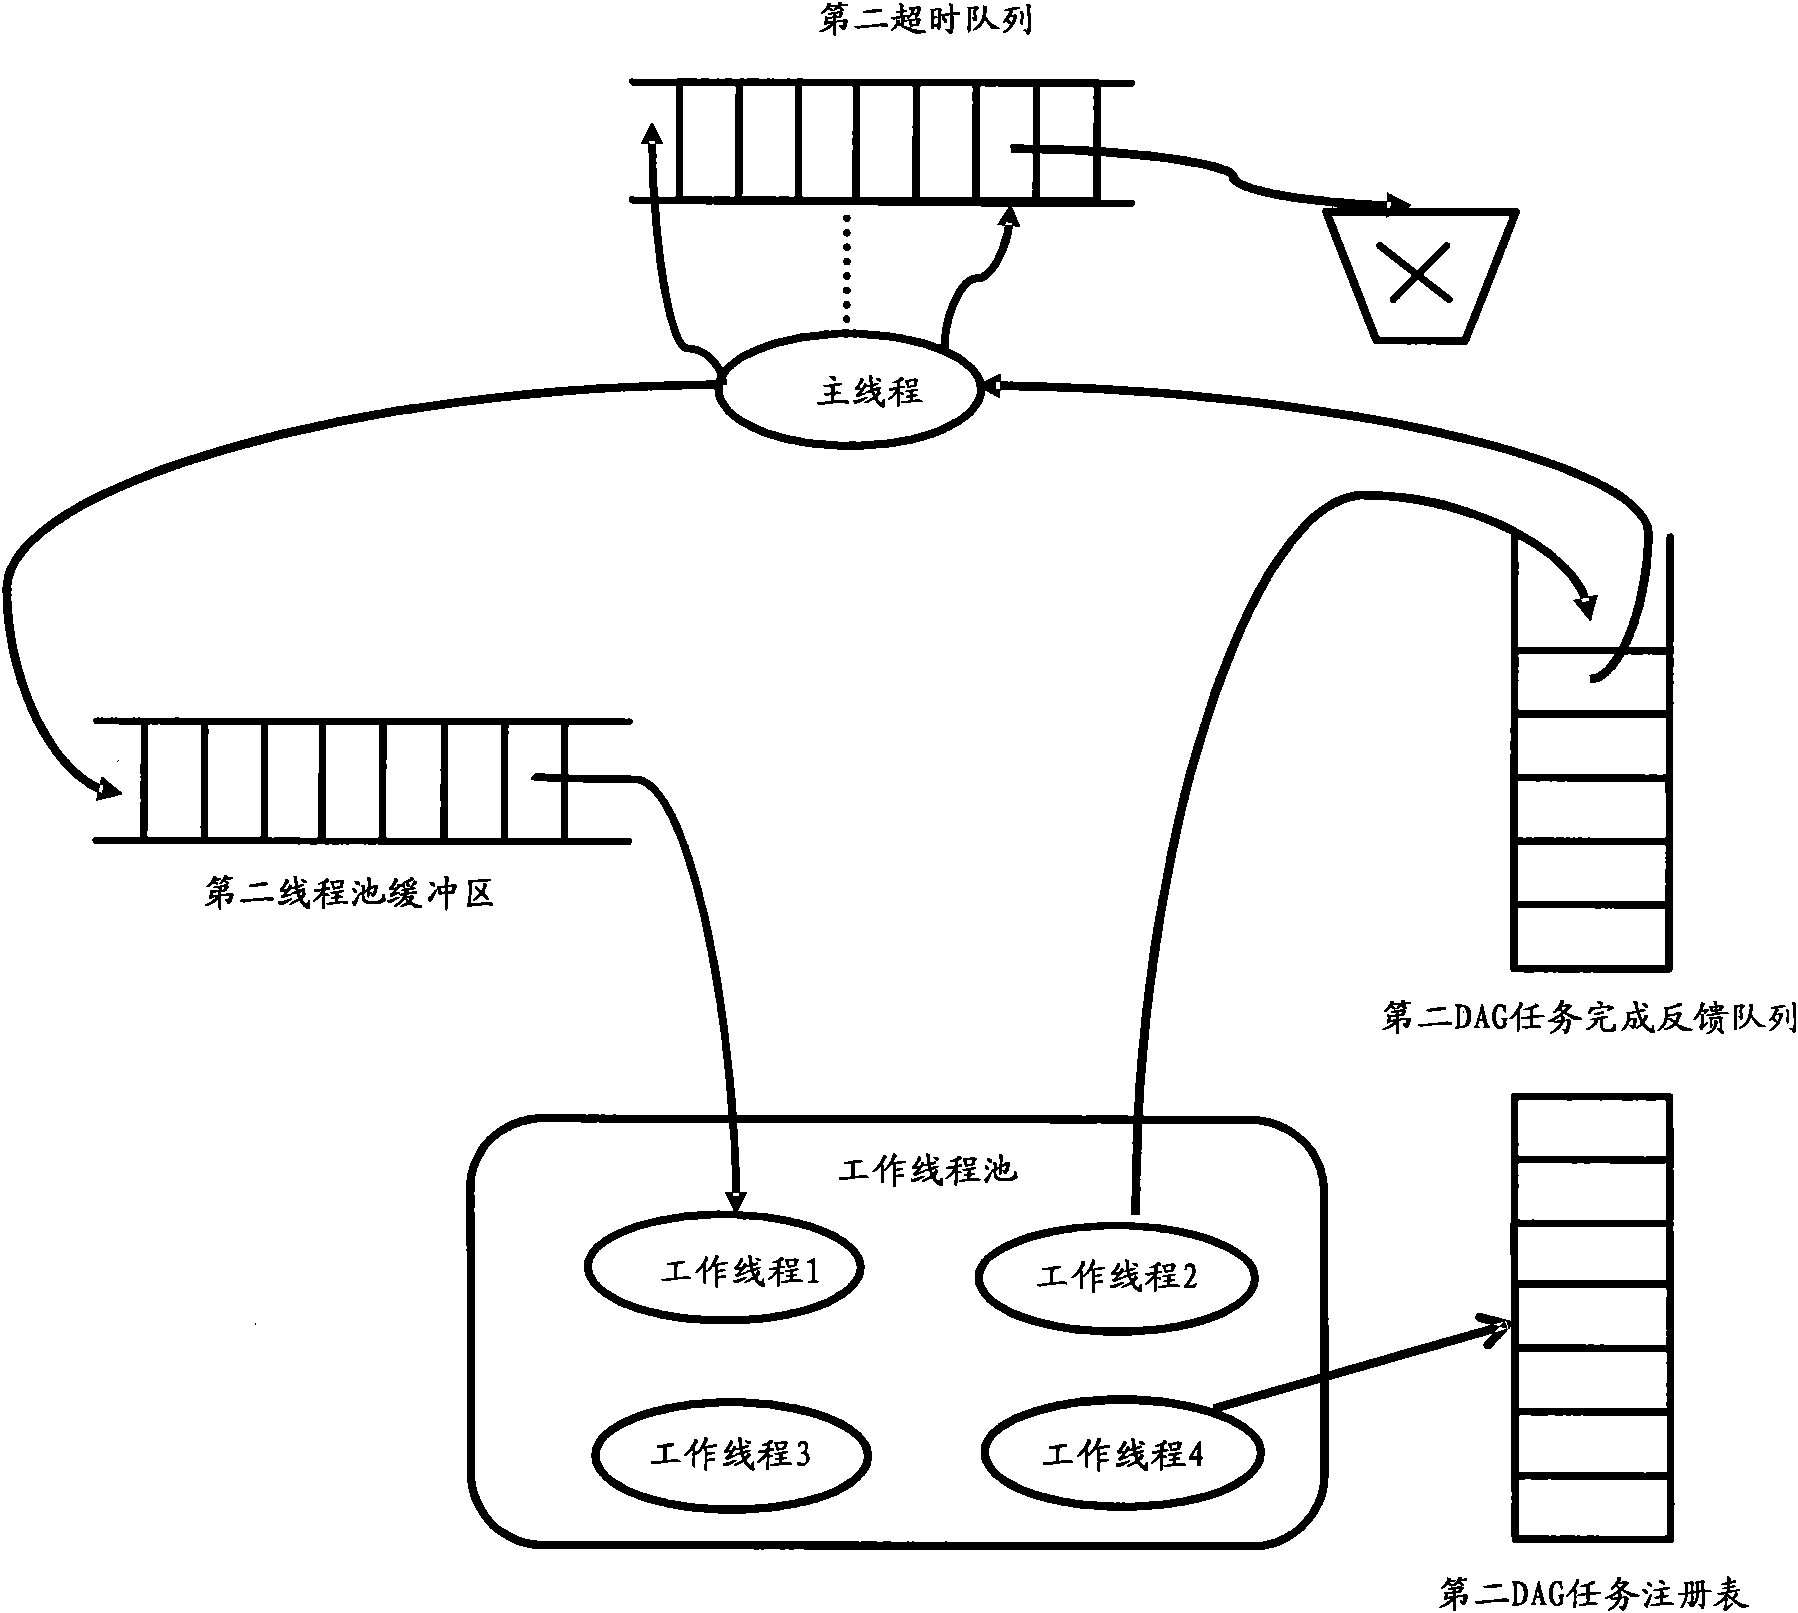 Multi-level parallel programming method